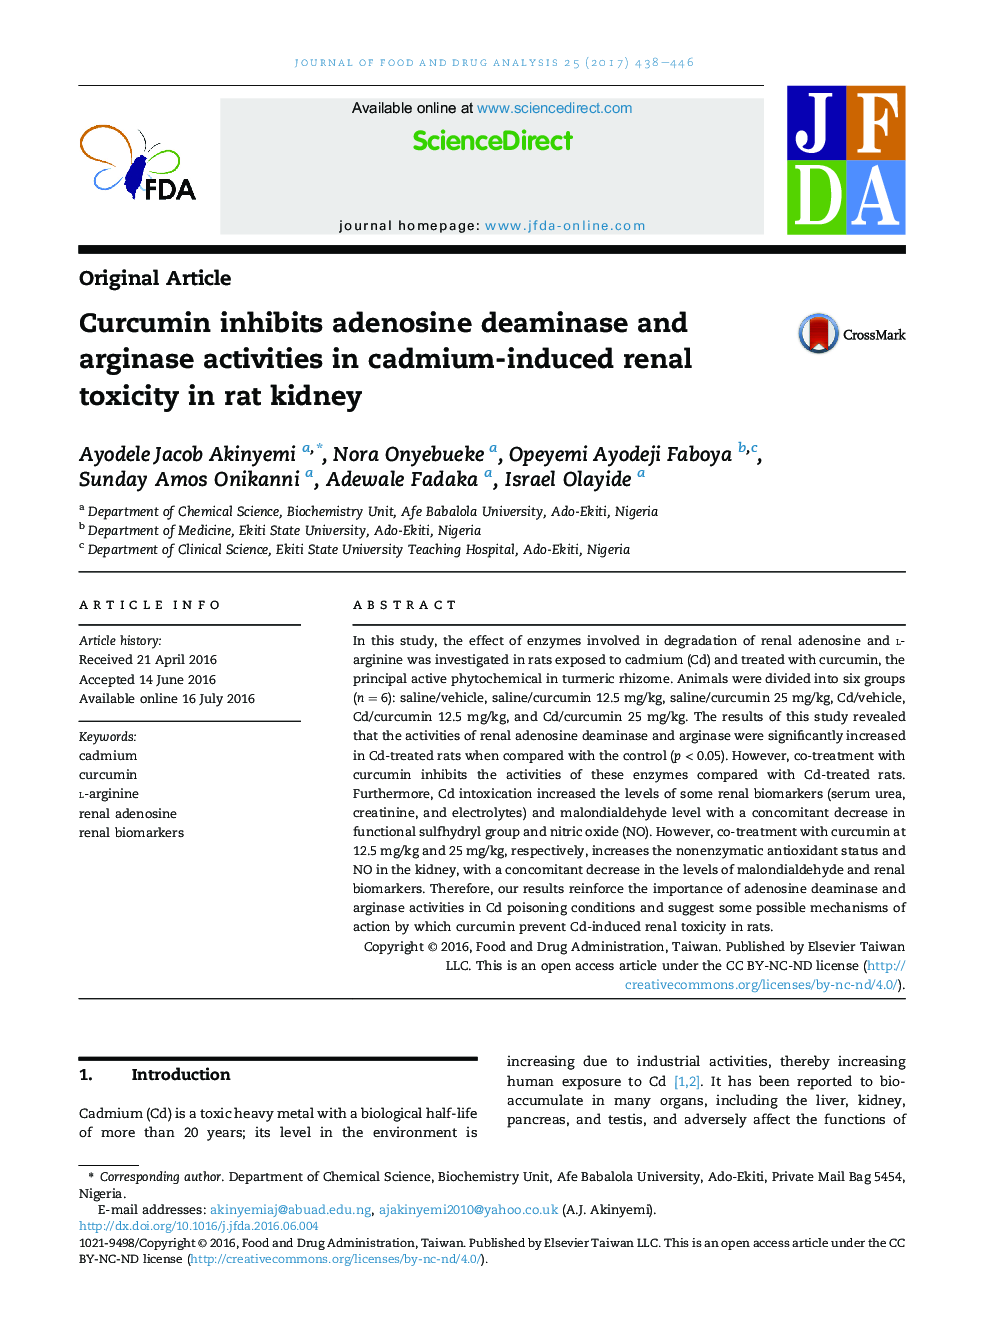 Curcumin inhibits adenosine deaminase and arginase activities in cadmium-induced renal toxicity in rat kidney